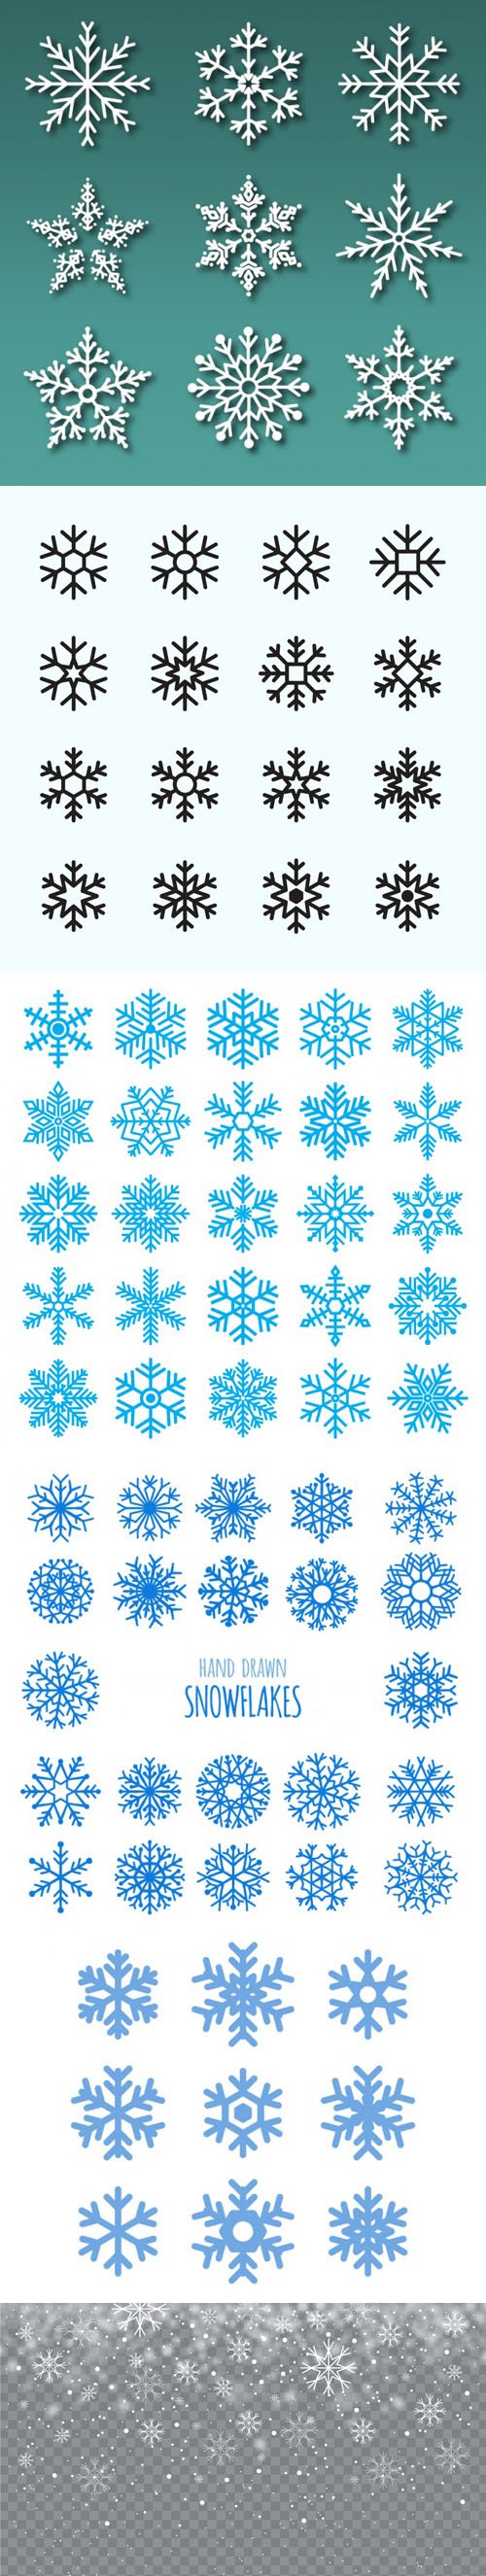 Snowflakes Vector Collection 2